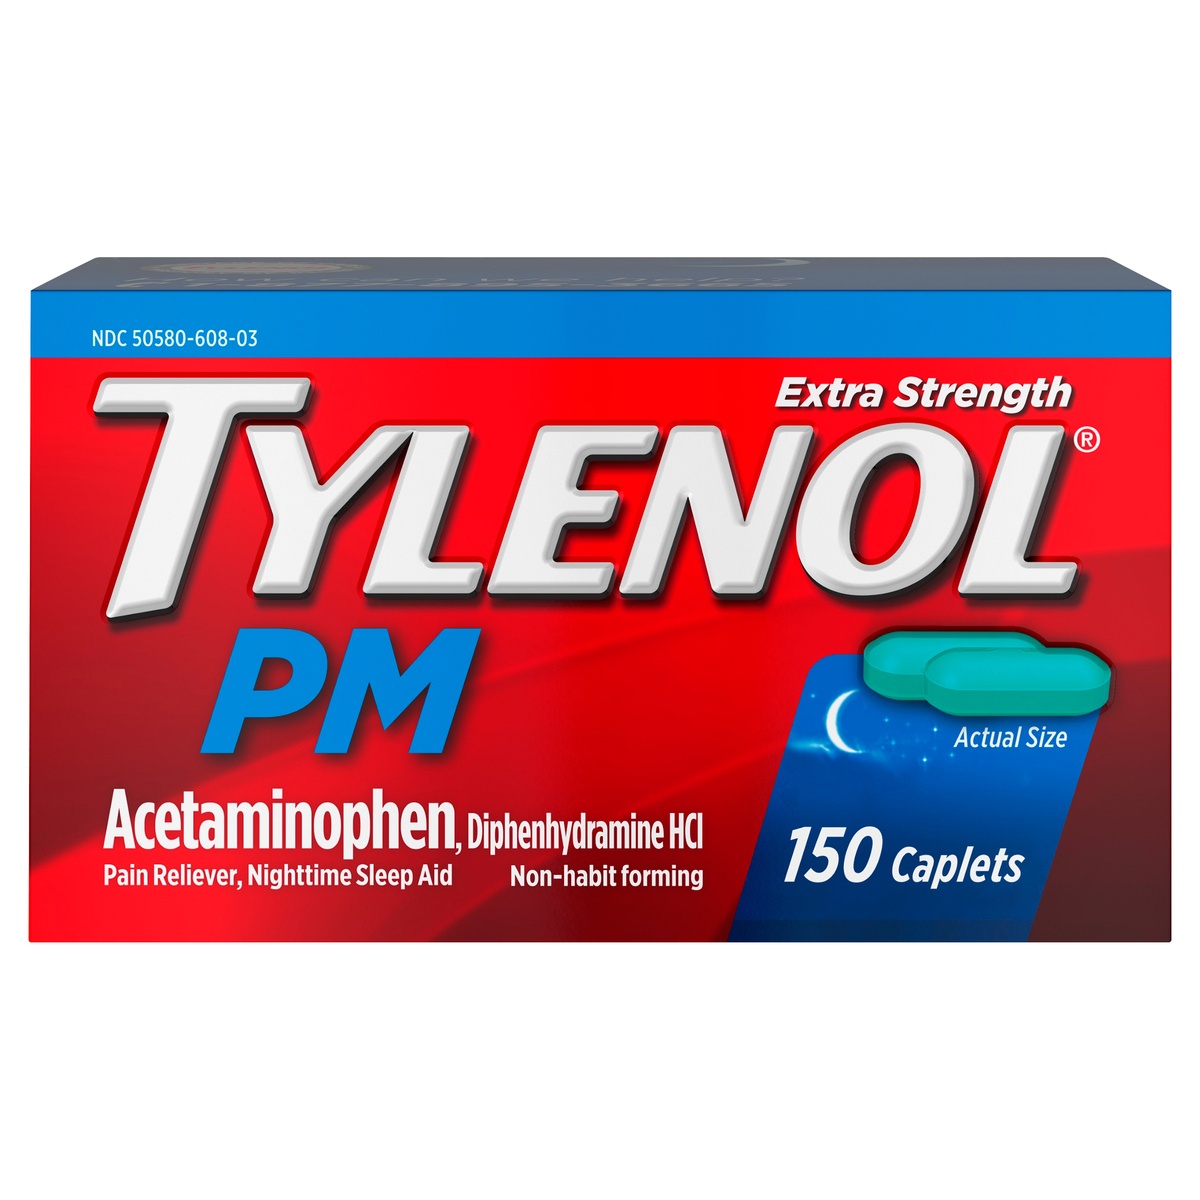 does tylenol make you sleepy